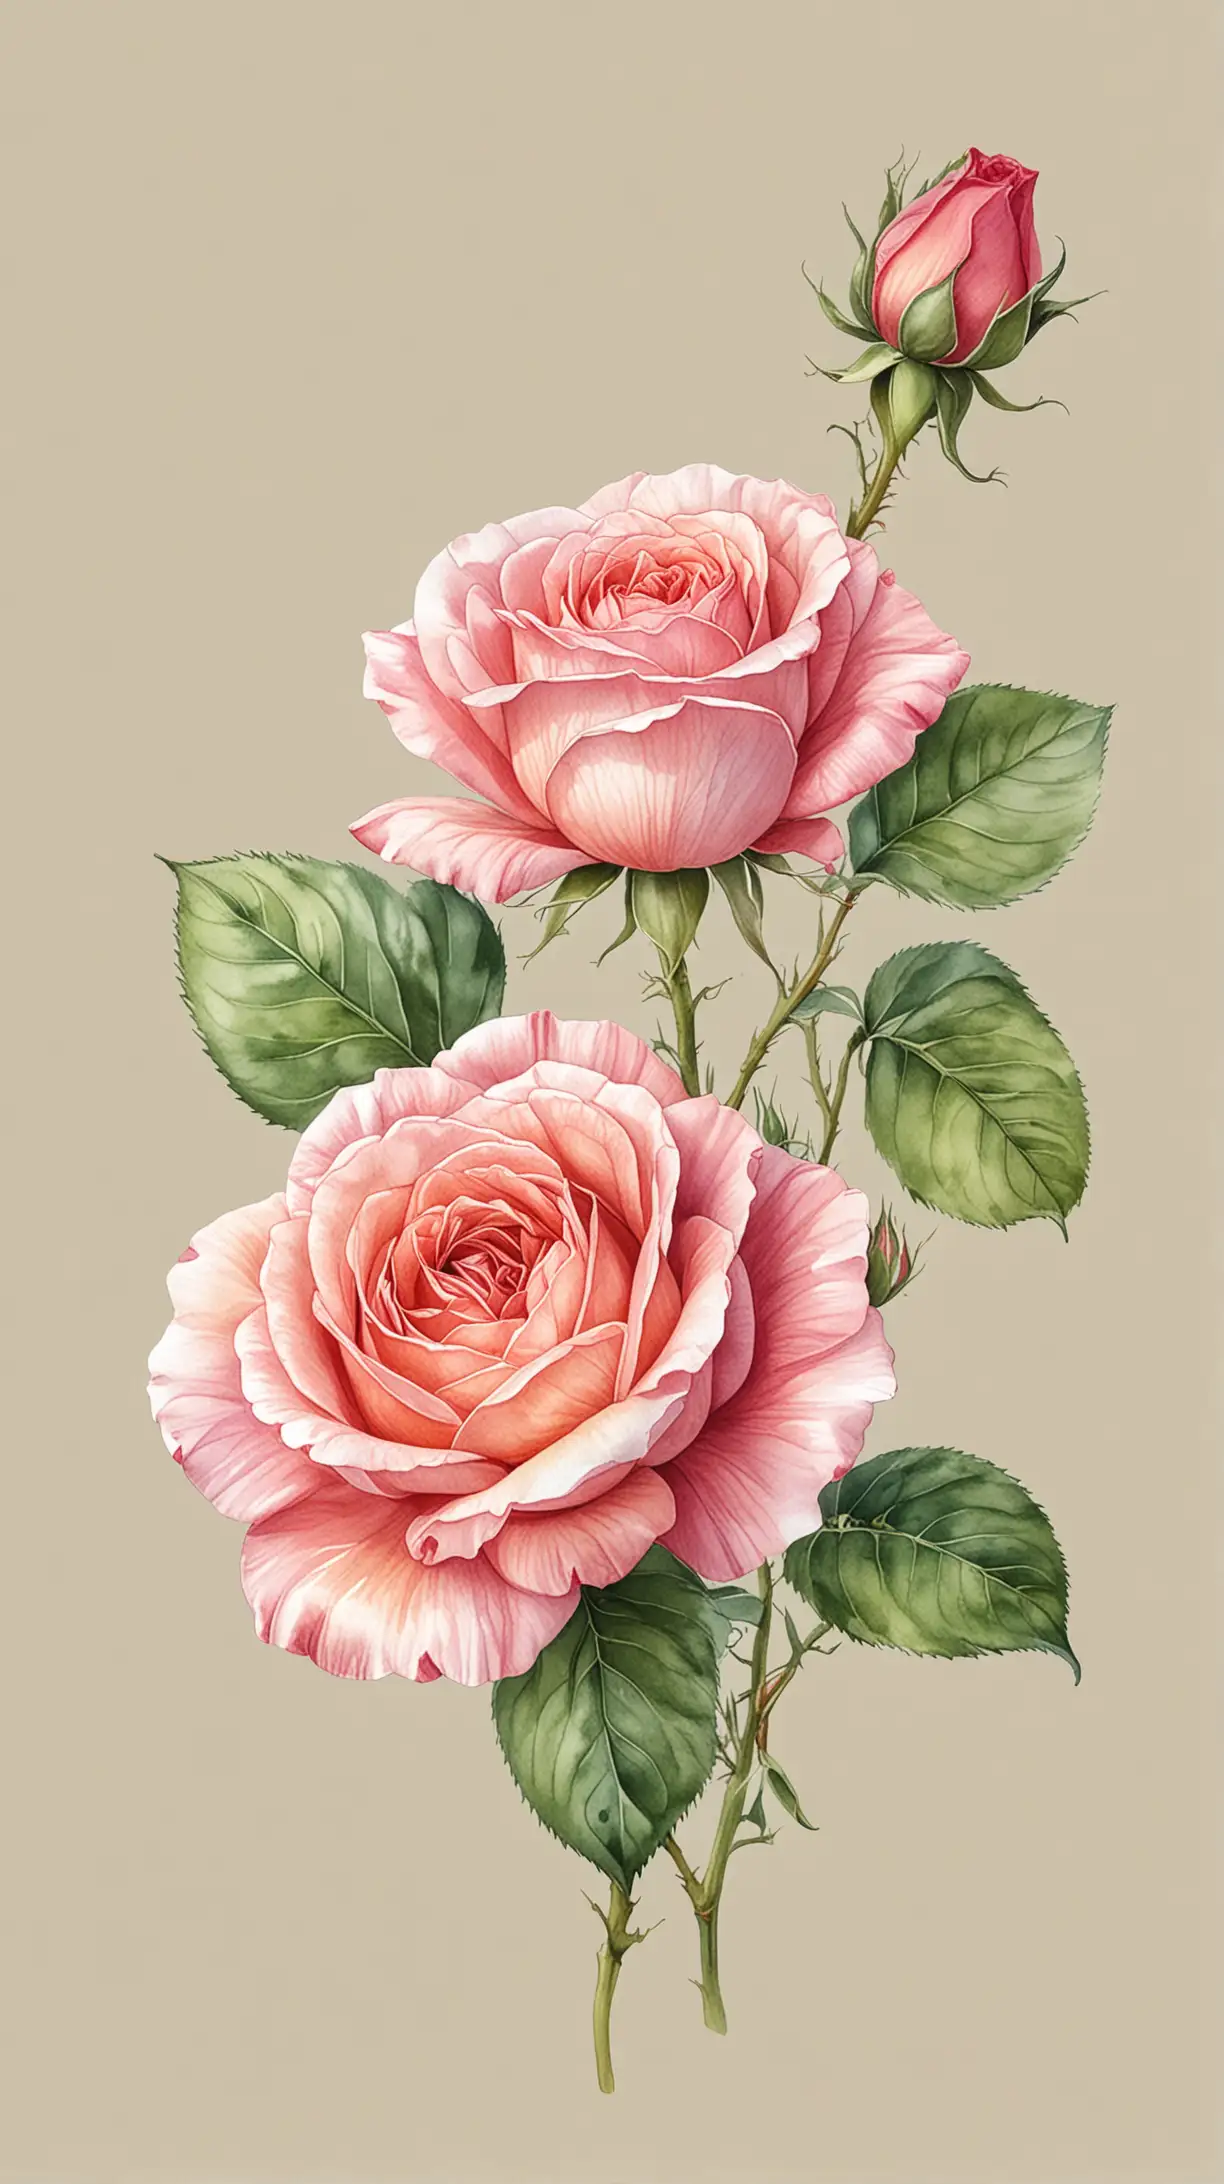 Rose Birthflower Line Art in Elegant Watercolor Style